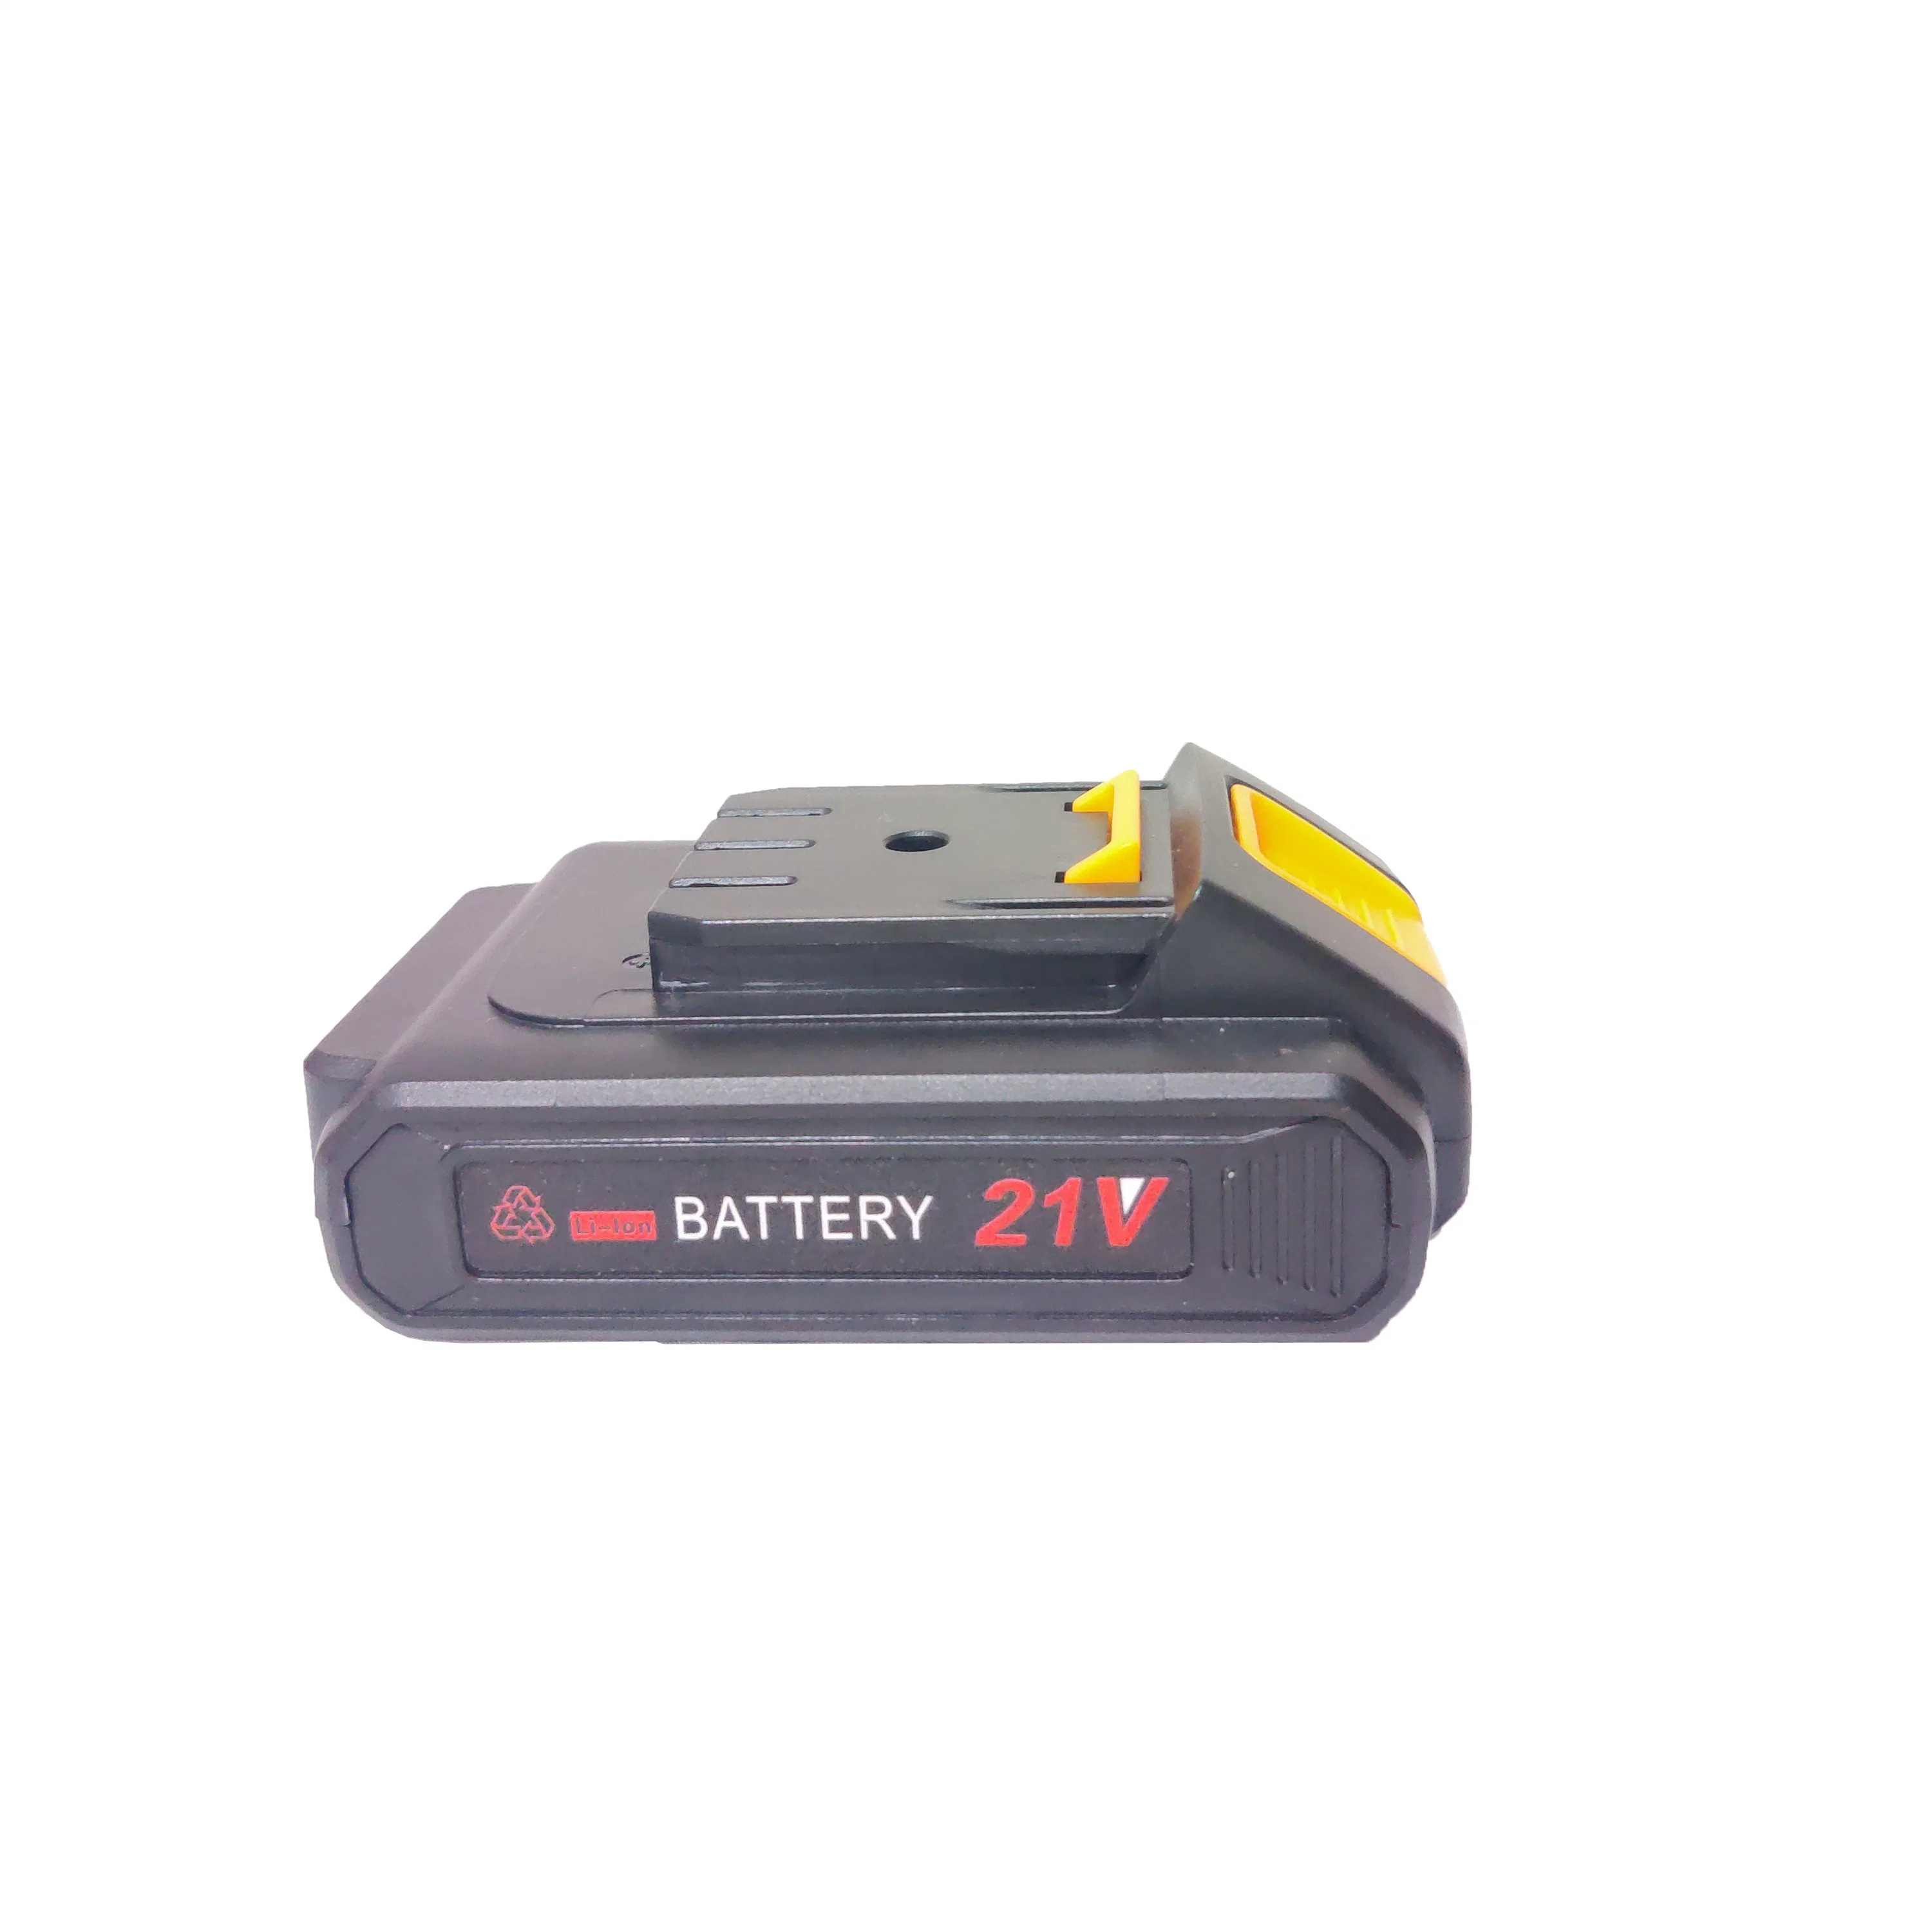 Youwe Professional Power Tools baterías de litio recargables Negro 21V 3,0ah batería de litio